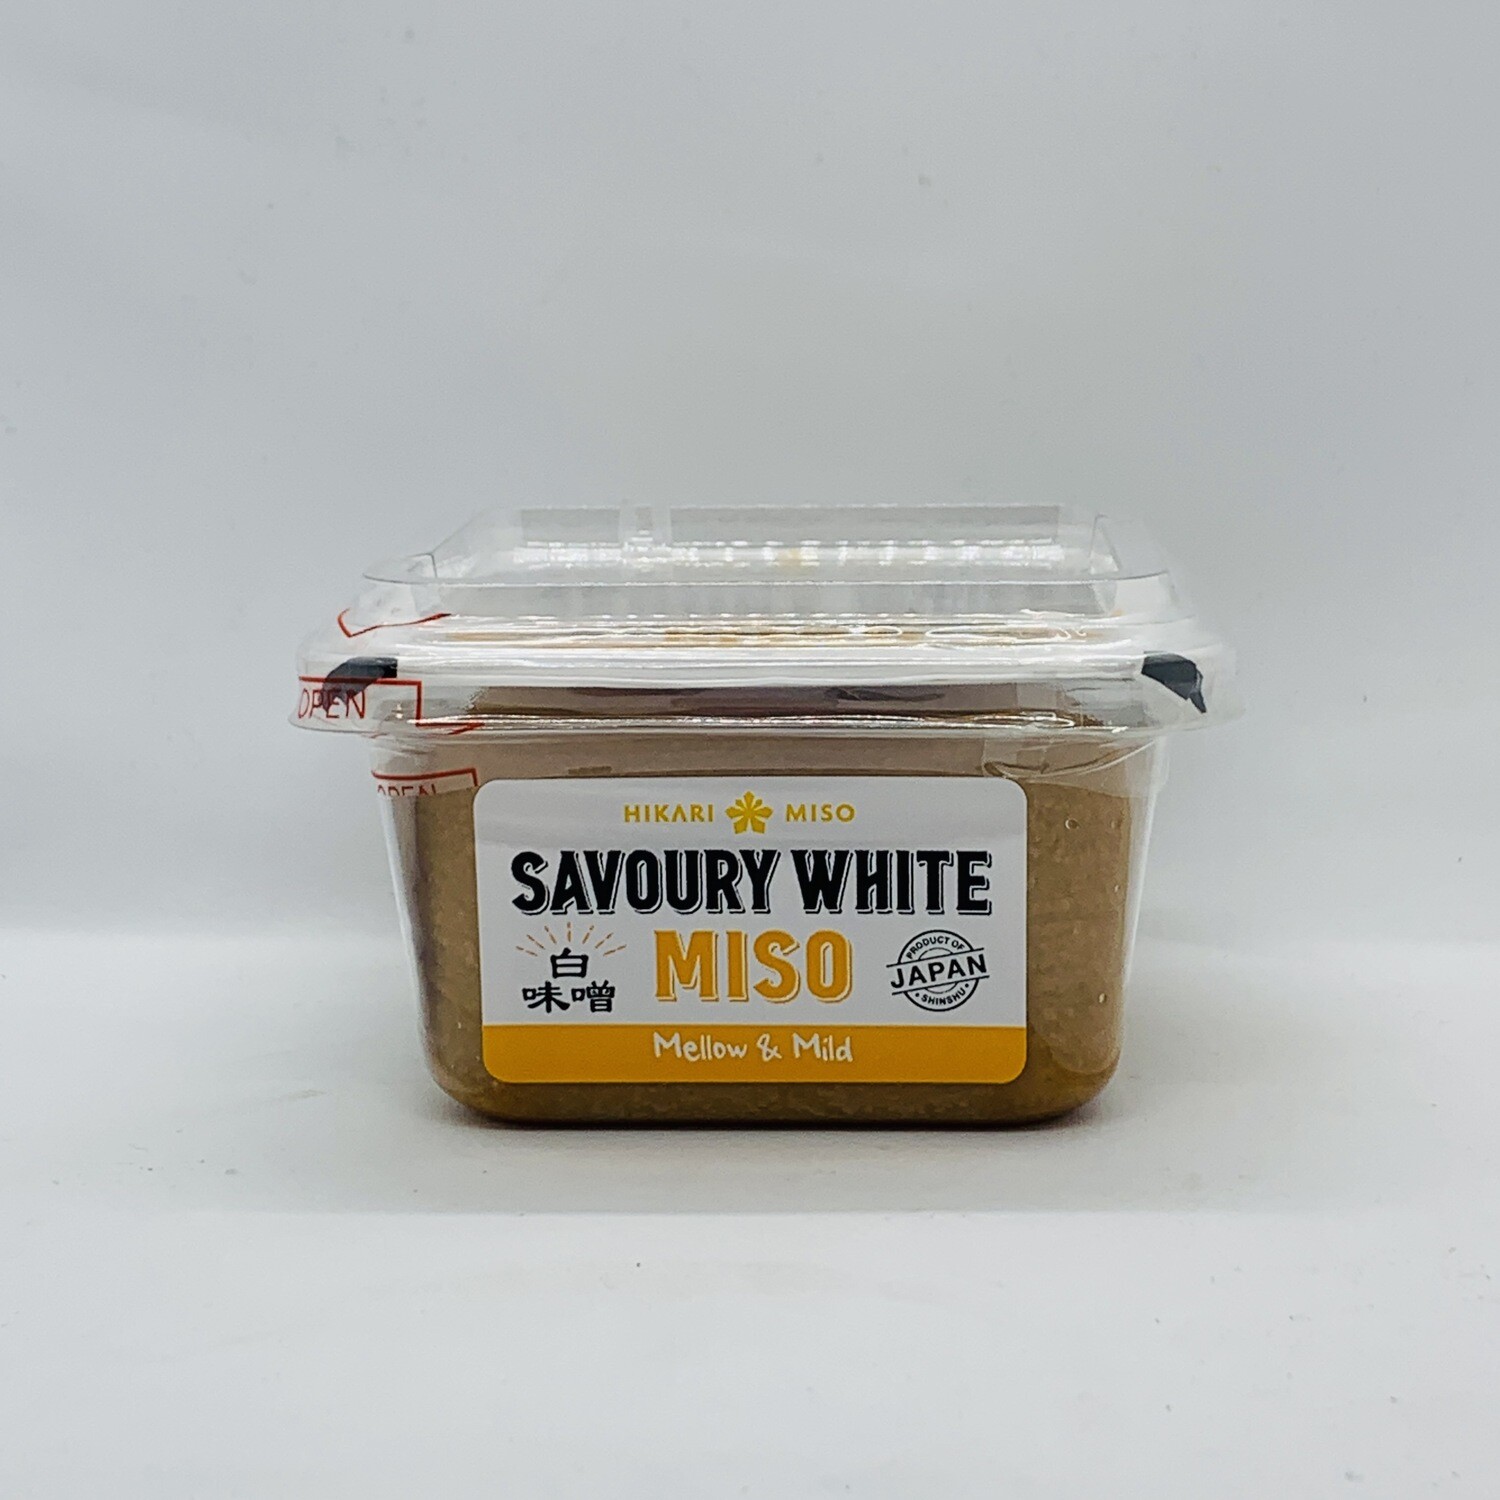 HIKARI Savoury White Miso